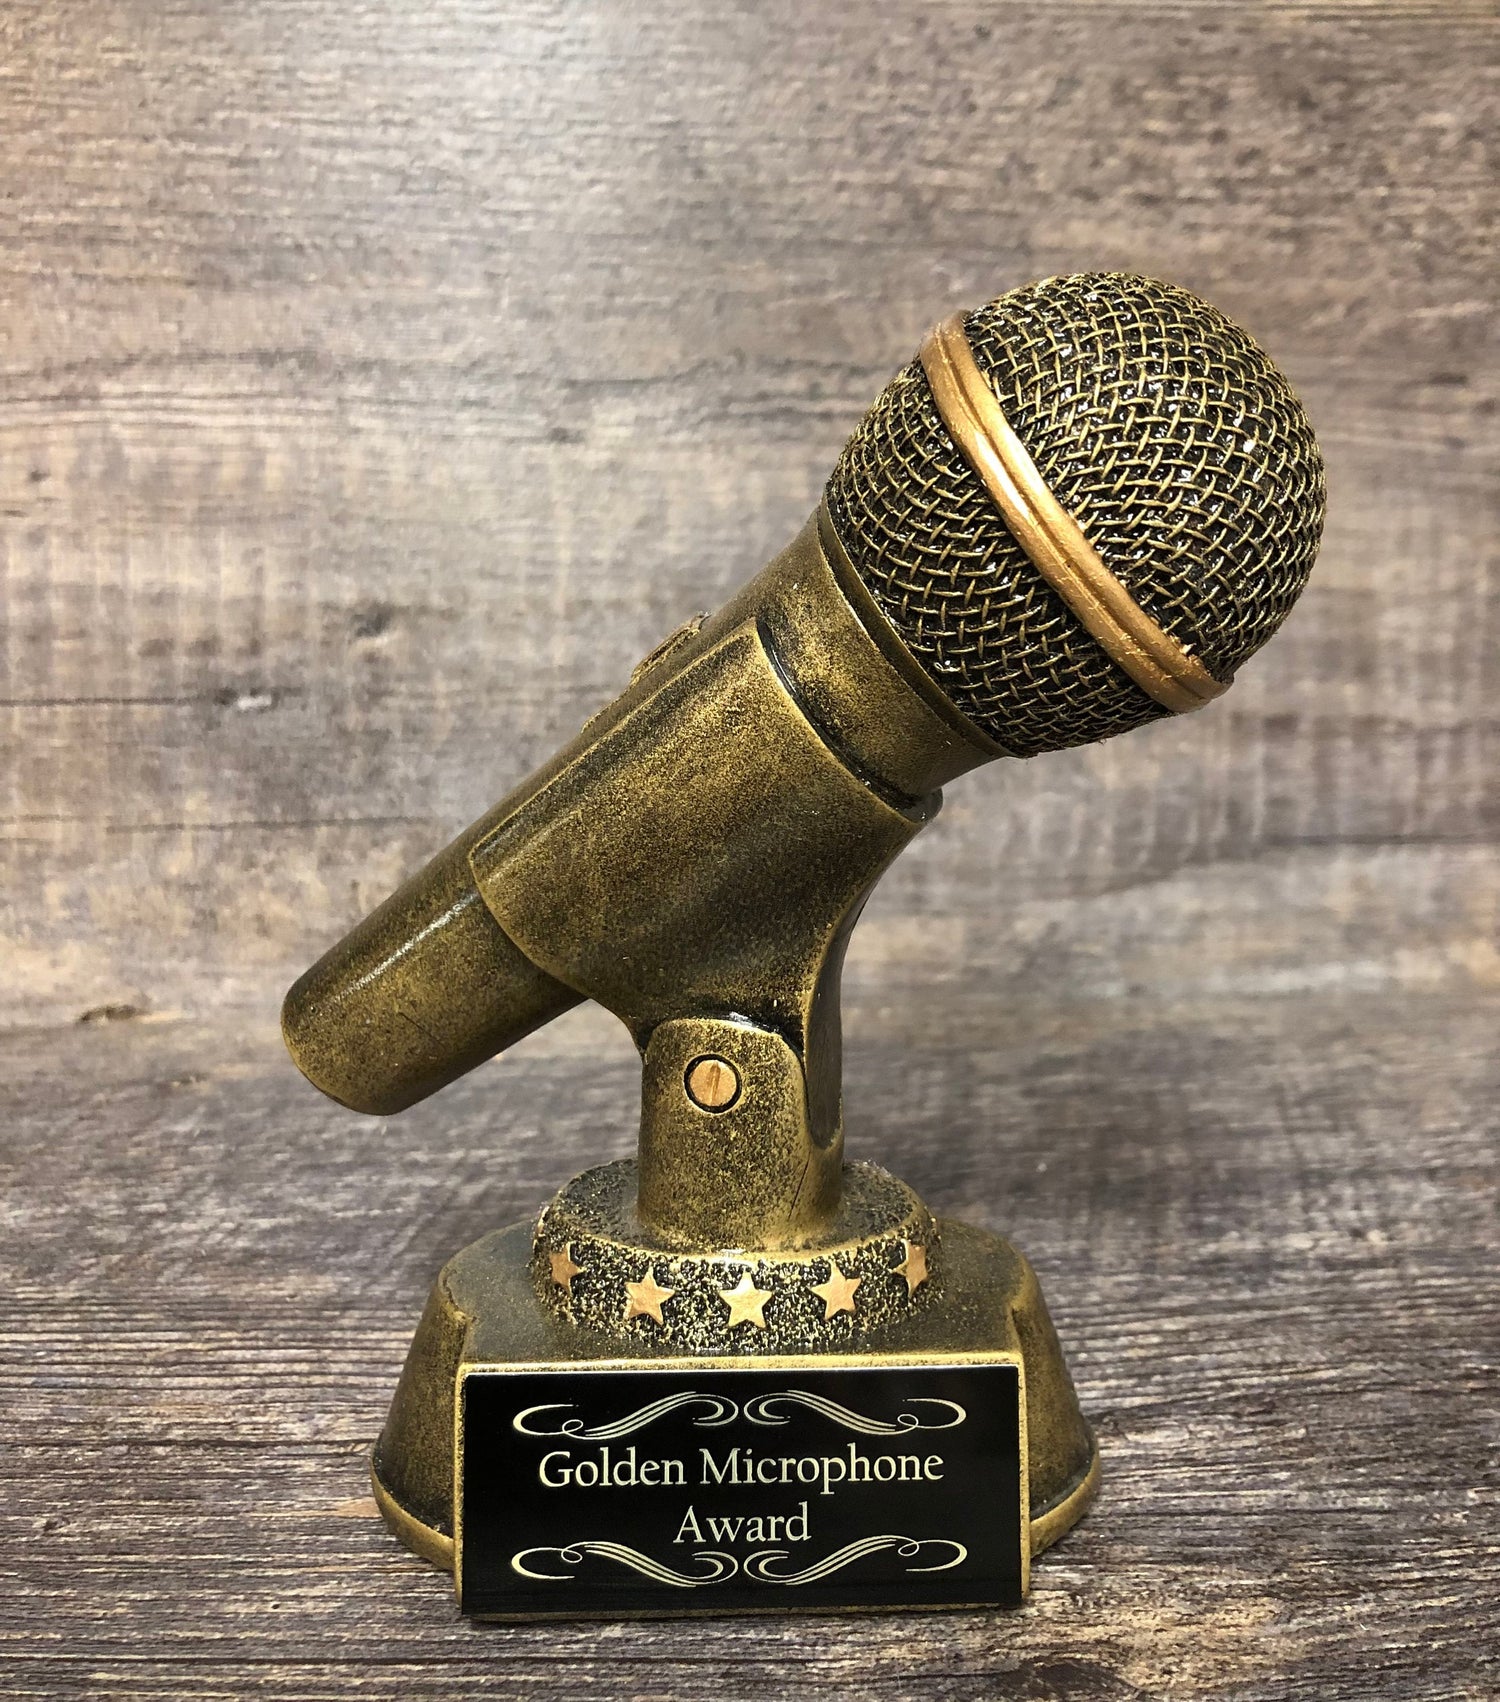 GOLDEN MICROPHONE Trophy Karaoke Best Singer Award Funny Trophy Singing Competition Music Golden Mic Announcer You Rock Emcee Recognition